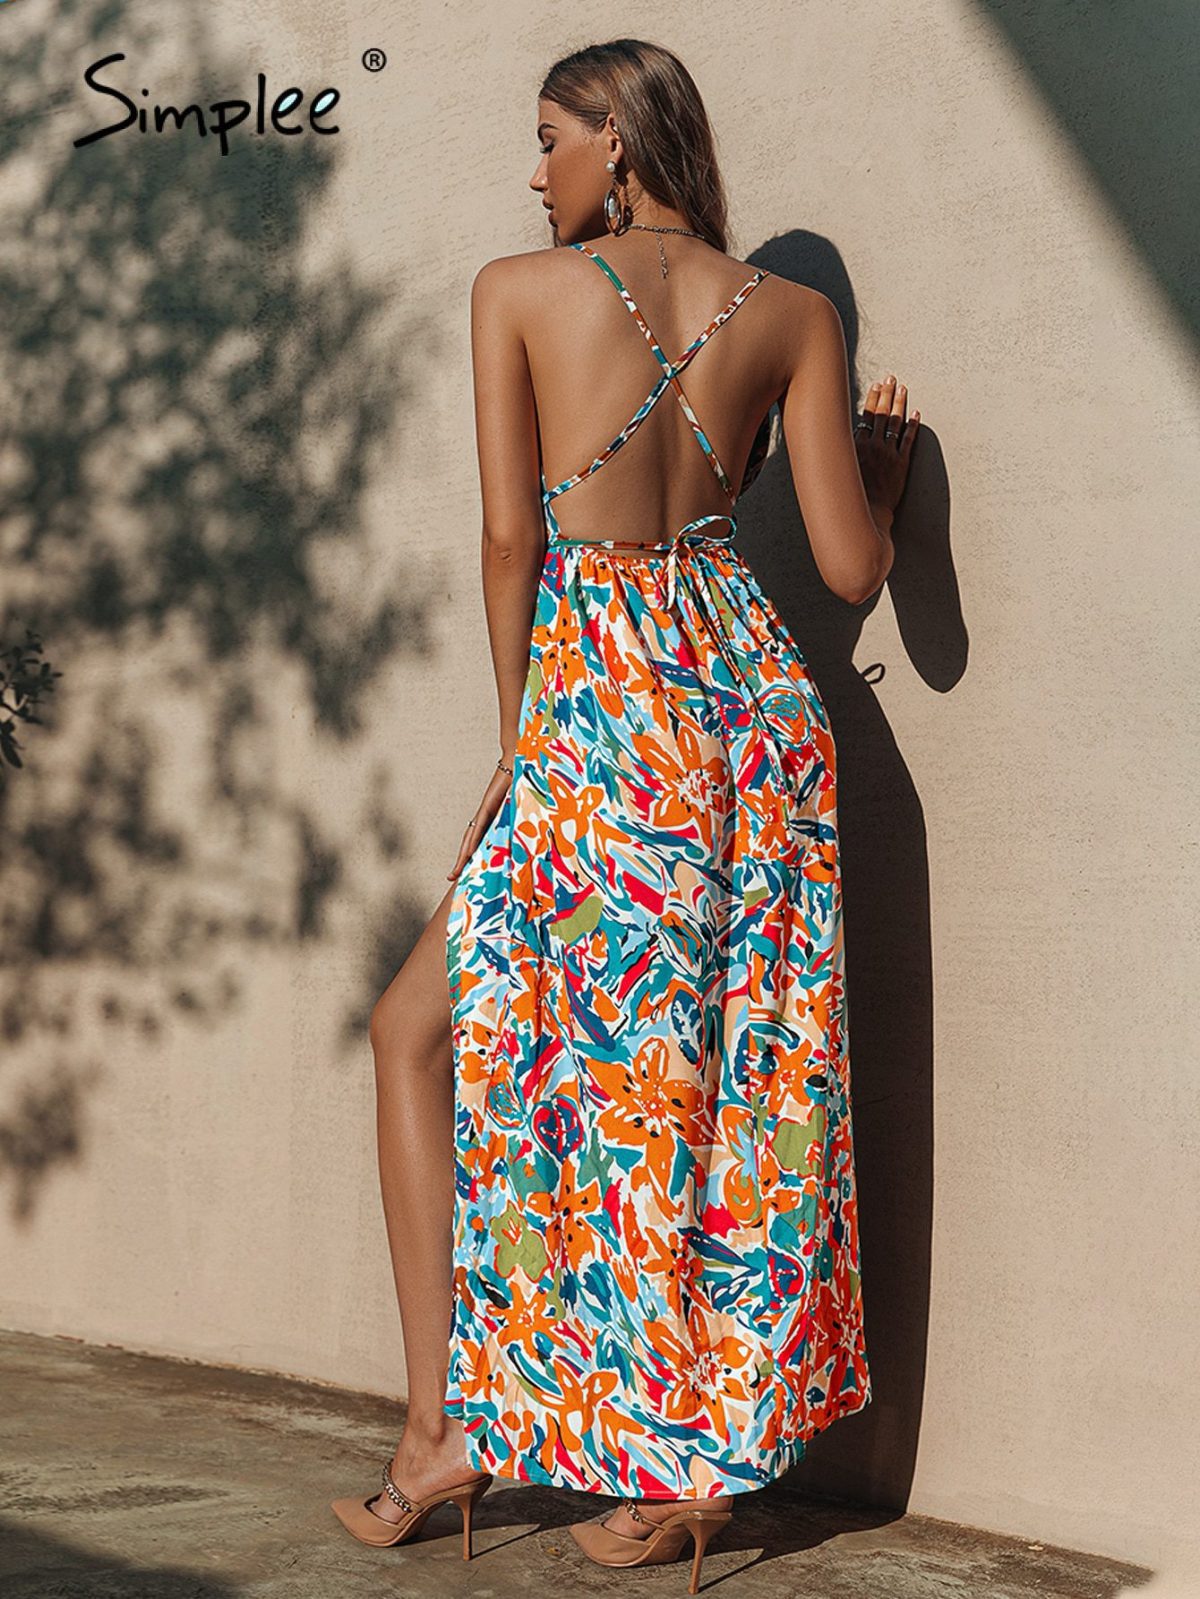 V-Neck Print Straps Backless High Waist Lace Up Split Maxi Beach Dress in Dresses